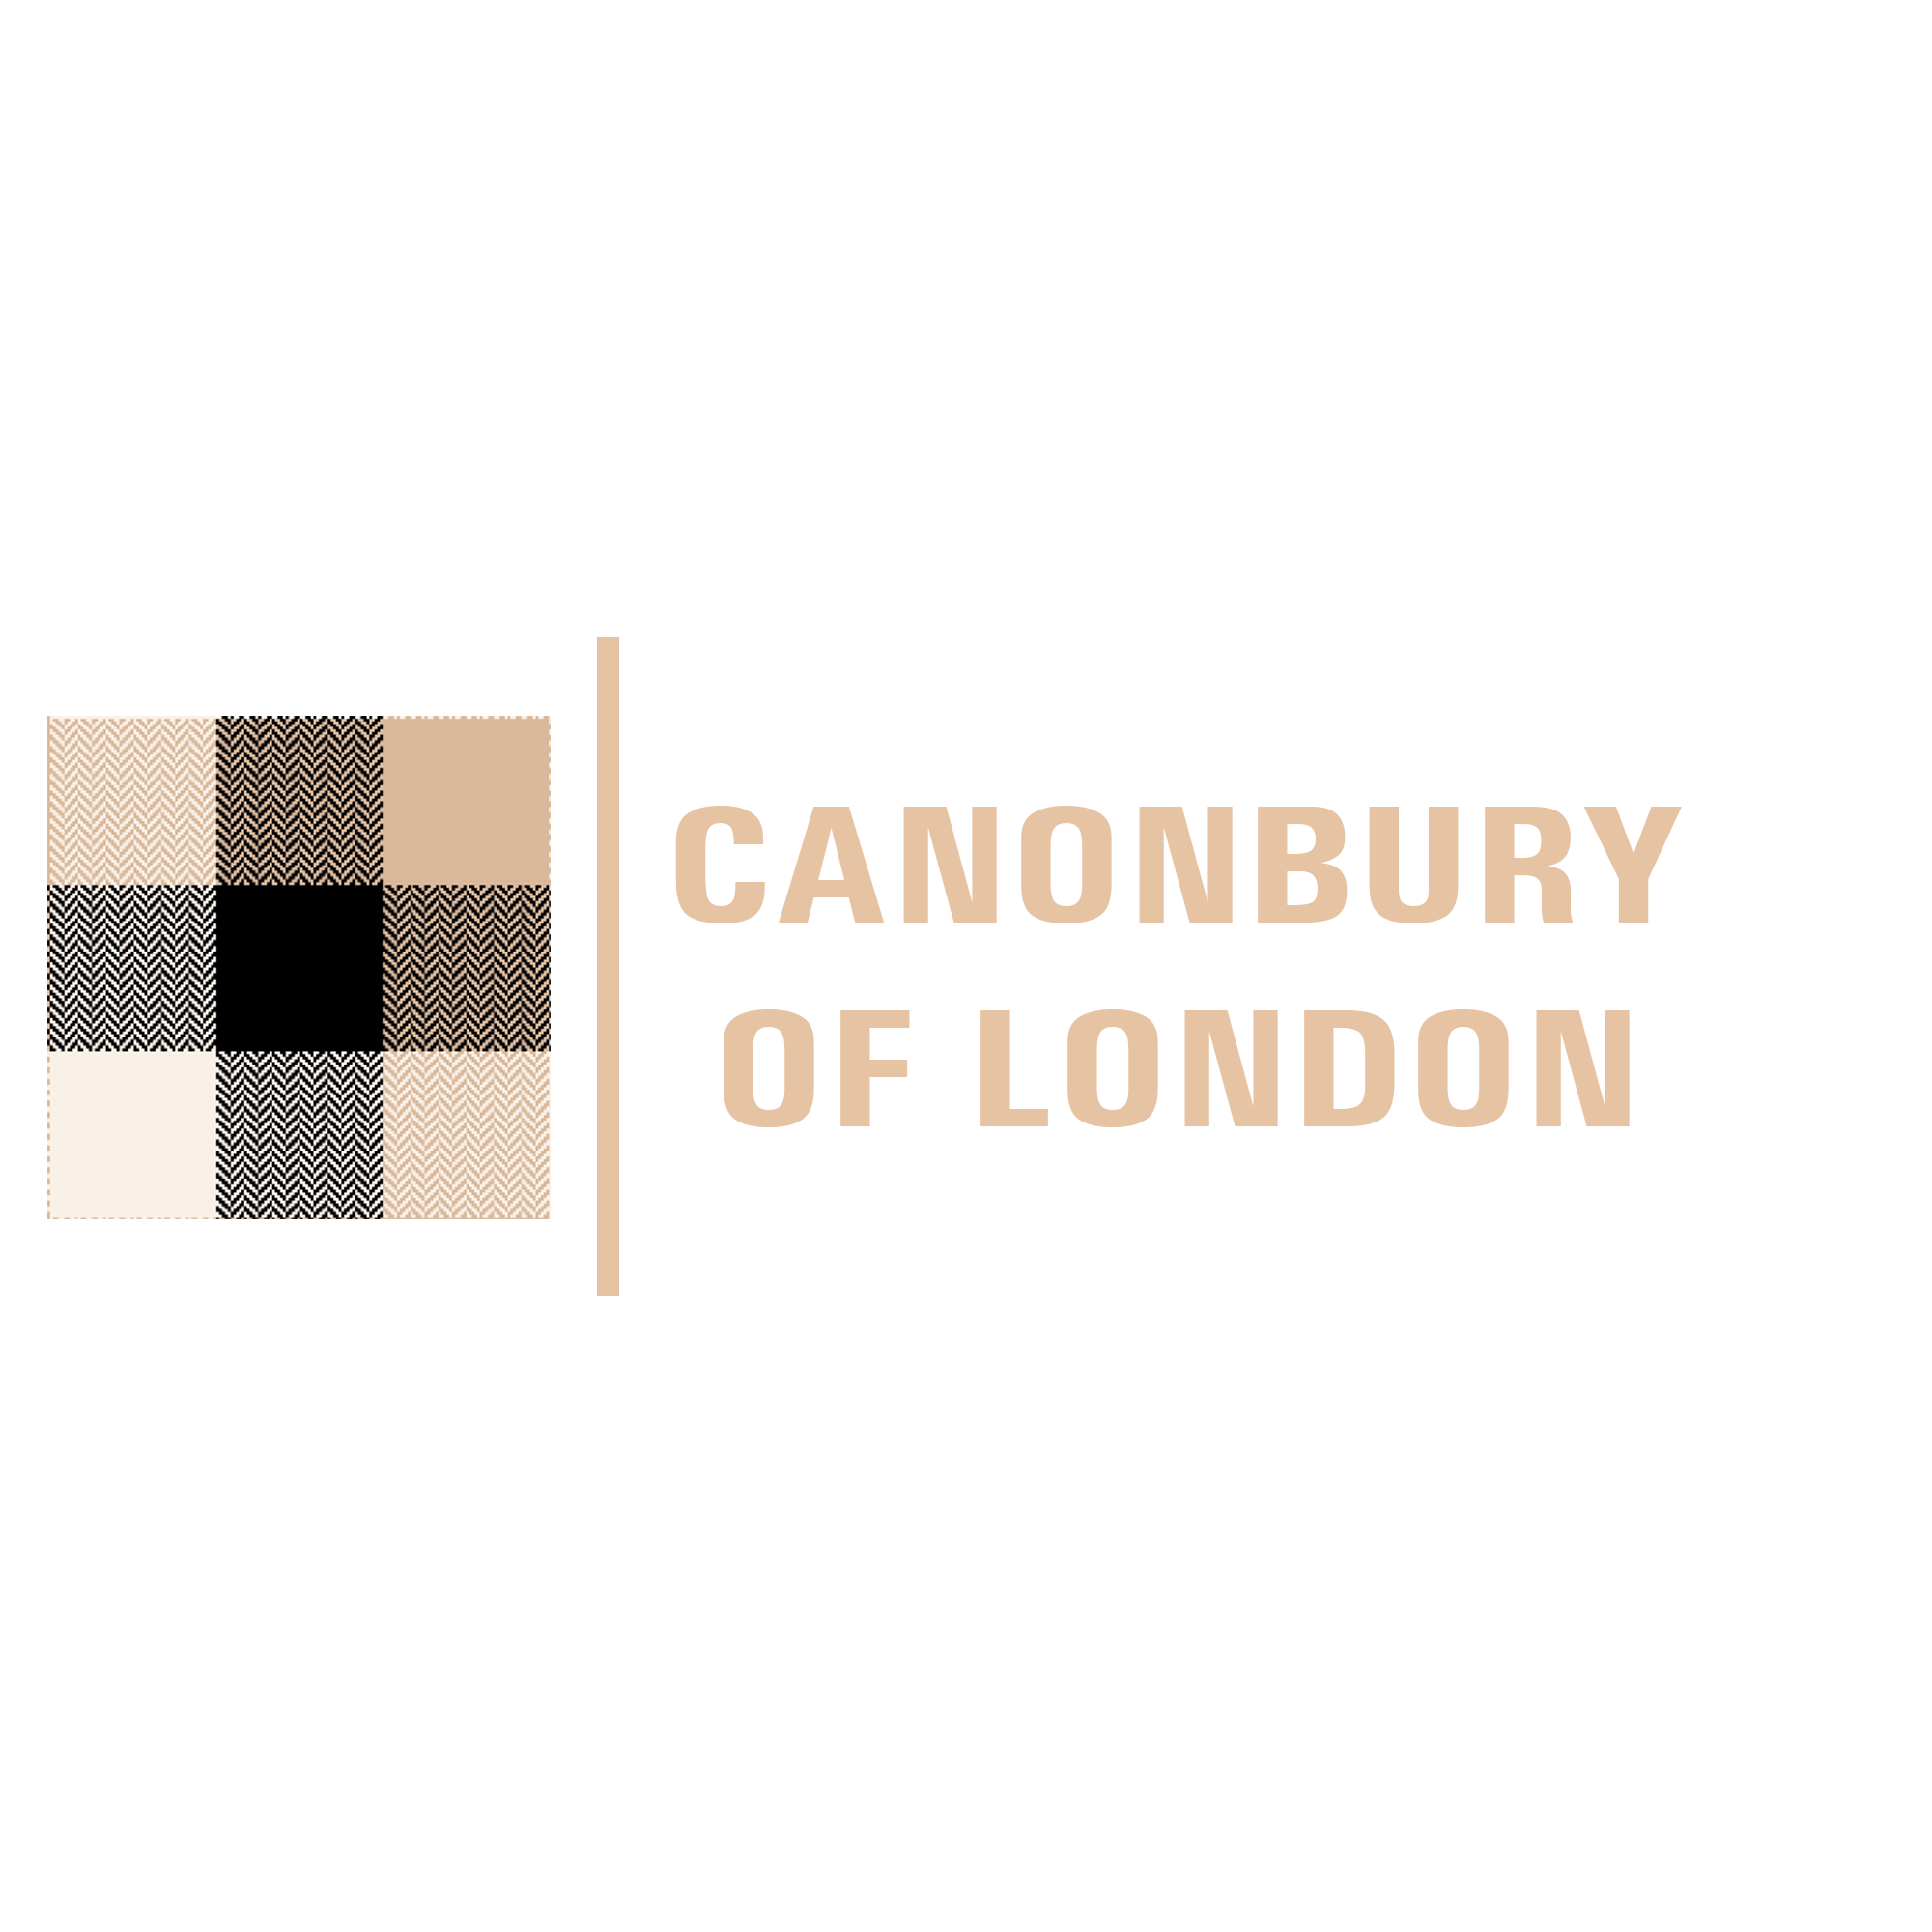 Canonbury of London